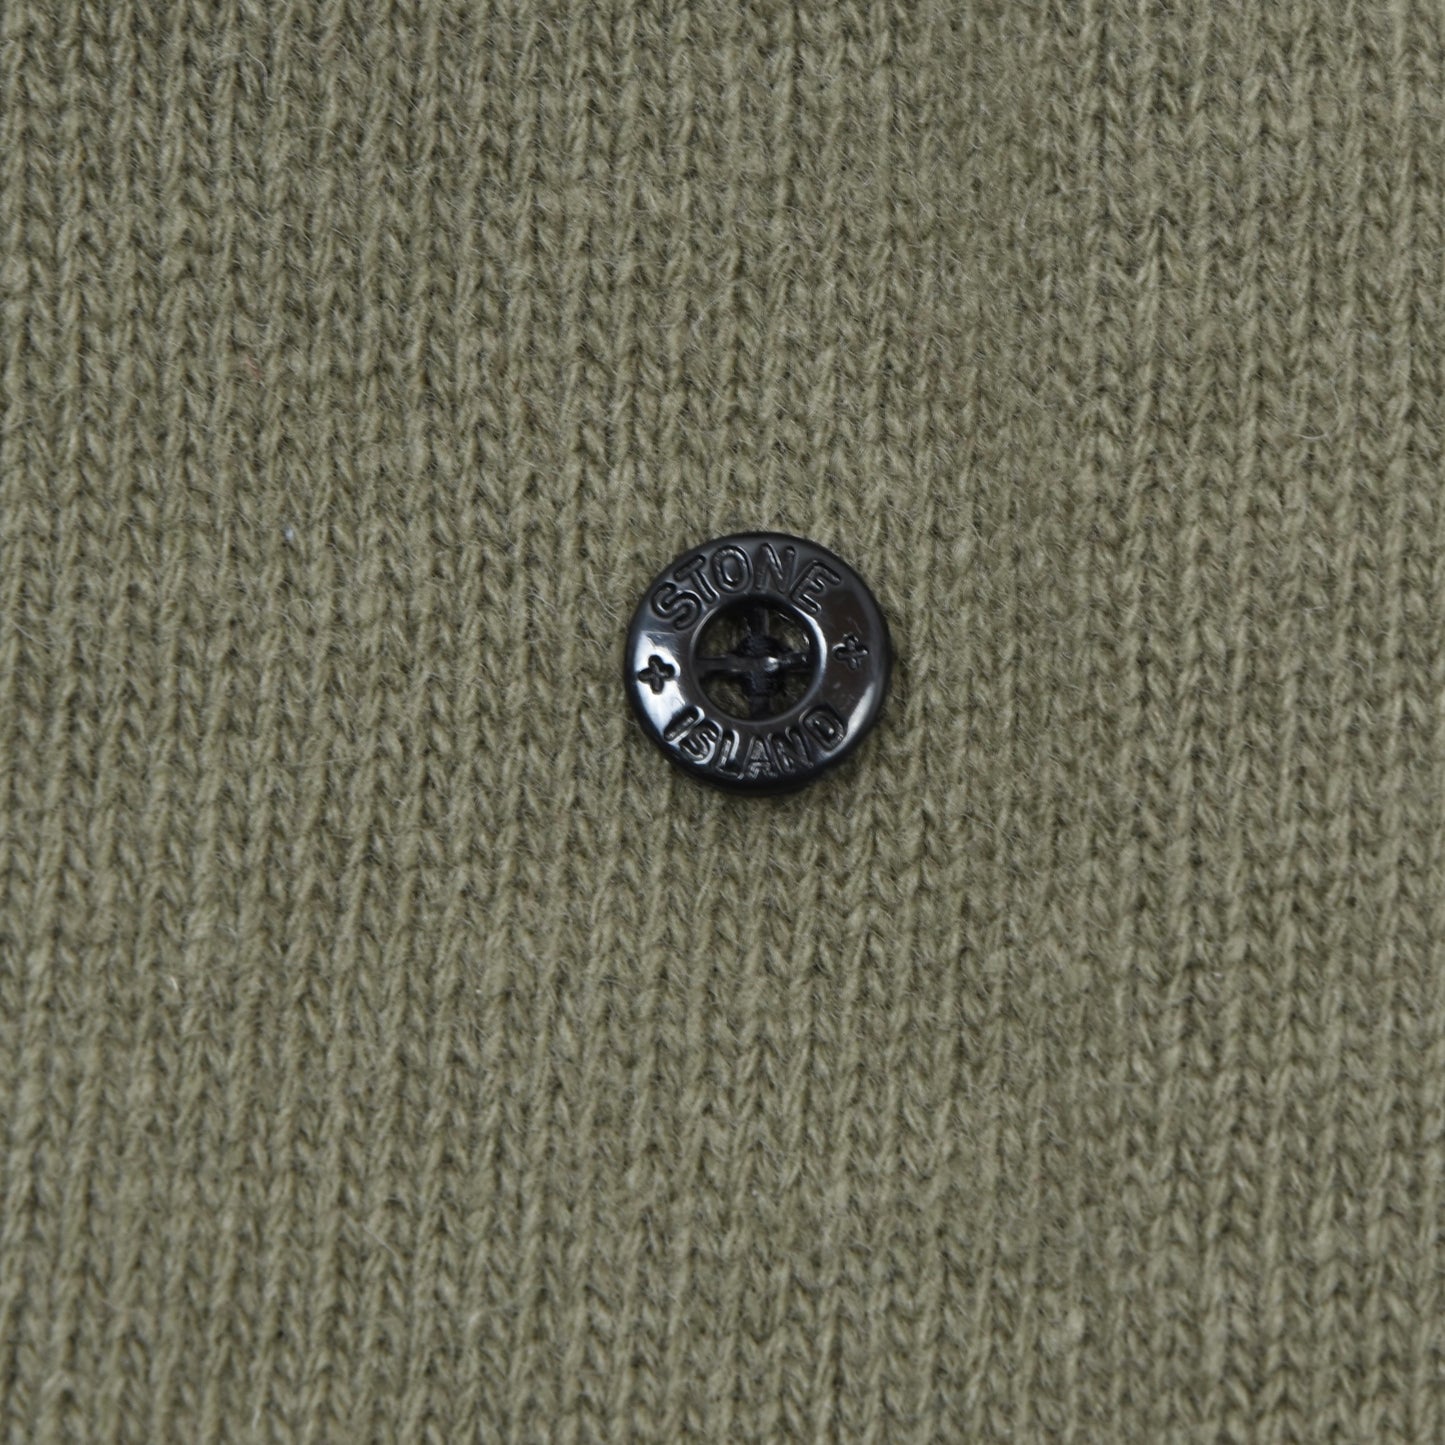 Stone Island Wool Blend Sweater AW2006 Size XL - Green